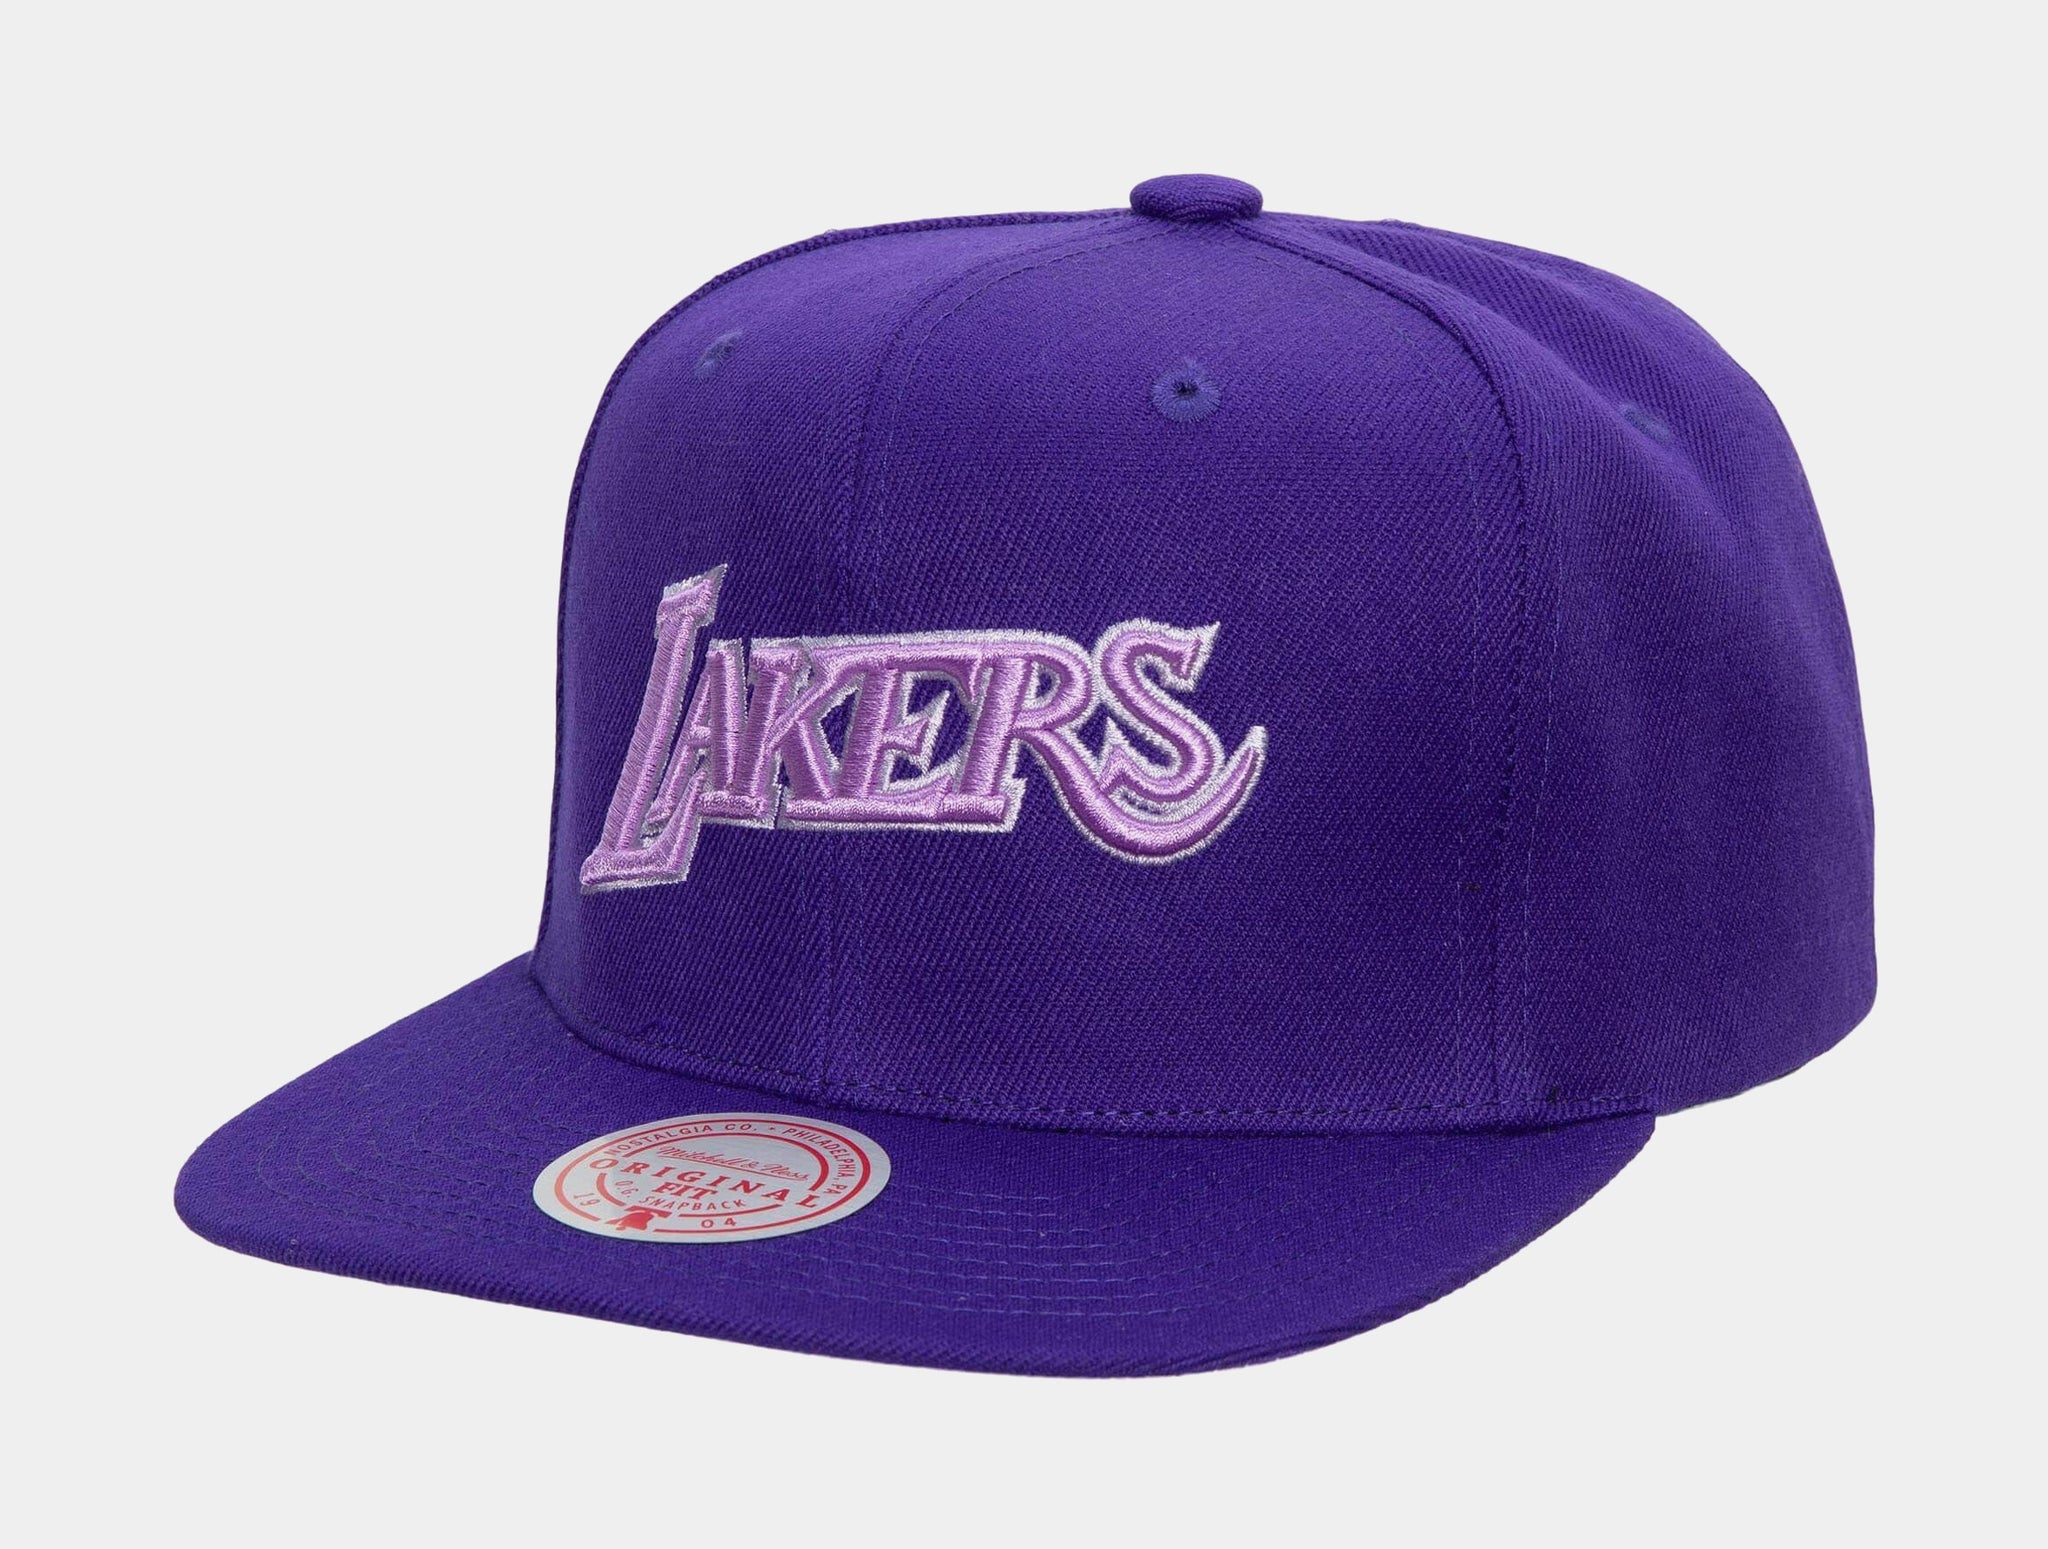 NBA, Accessories, Los Angeles Lakers Original Nba Certified Cap